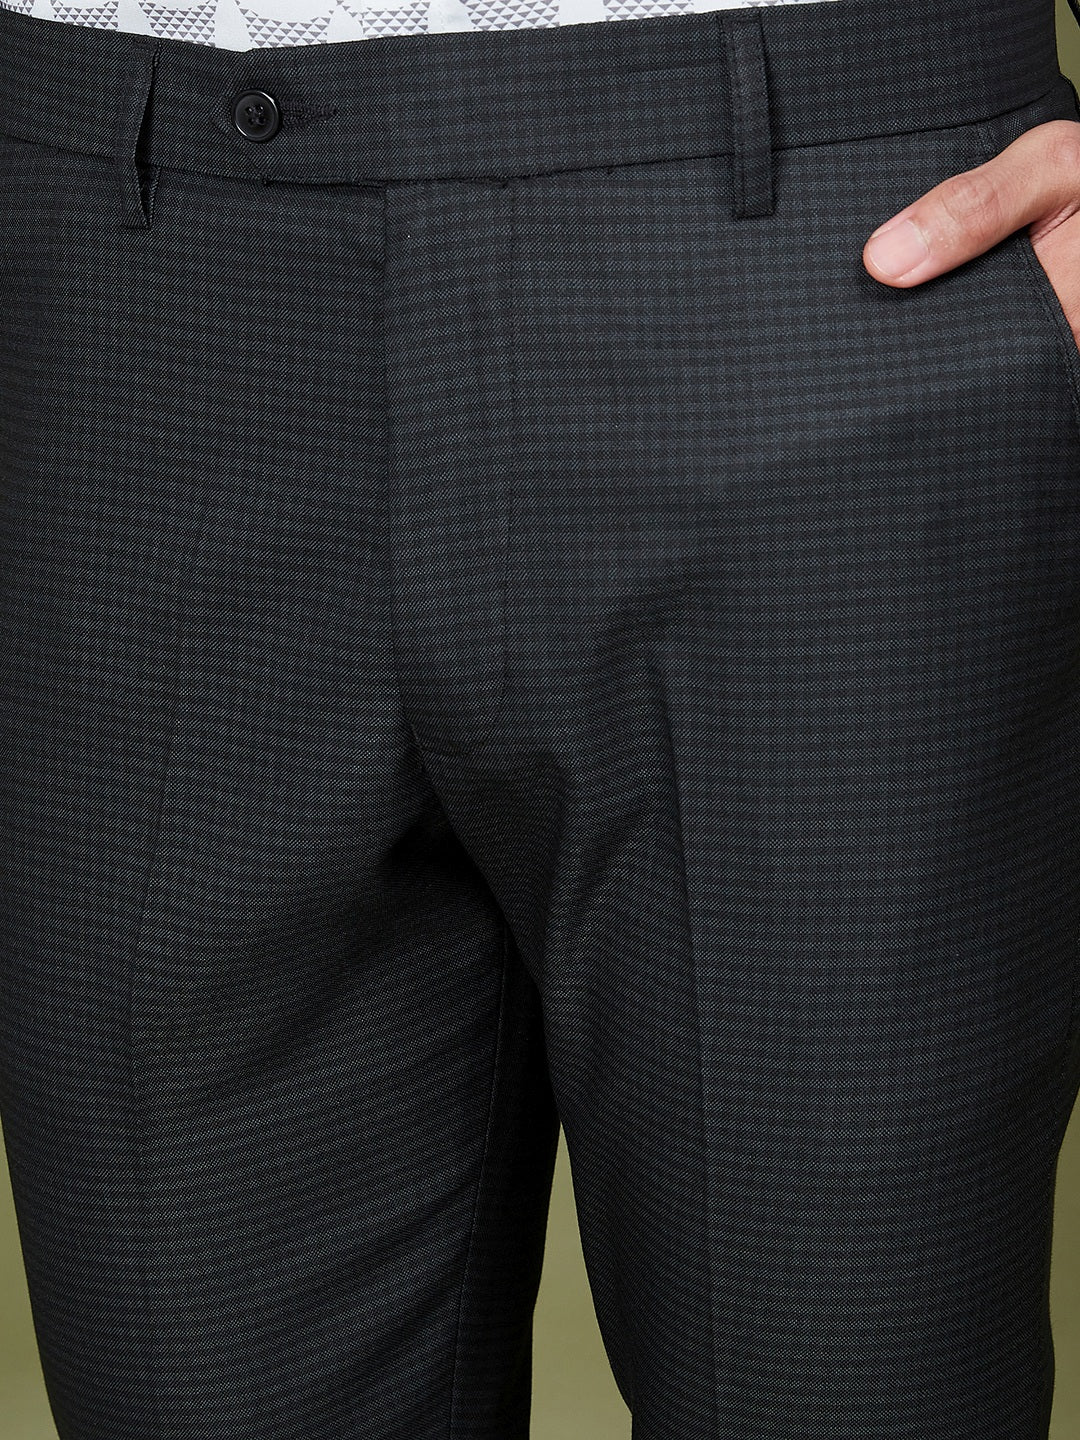 DENNISON Men Checked Smart Tapered Fit Easy Wash Formal Black Trousers   dennisonfashionindia